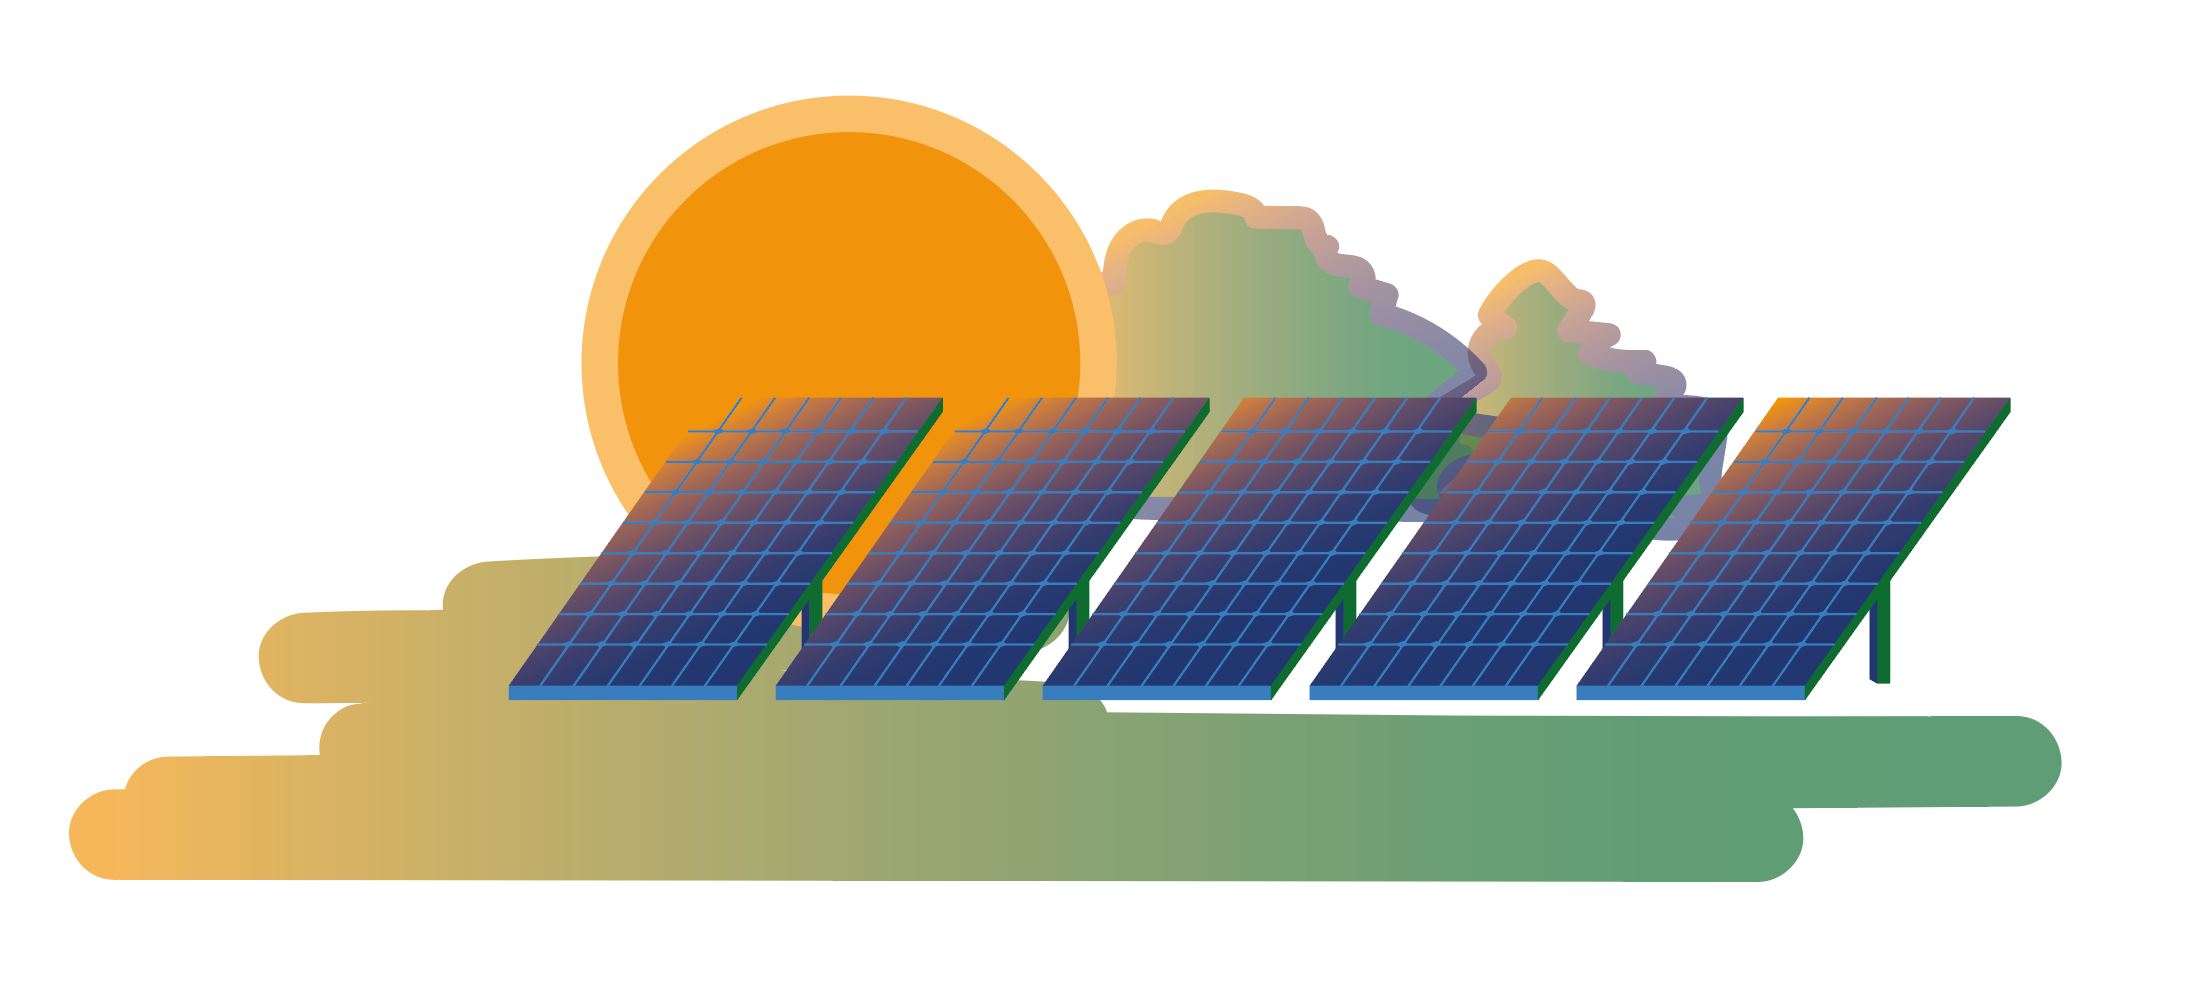 4 renewable energy illustration